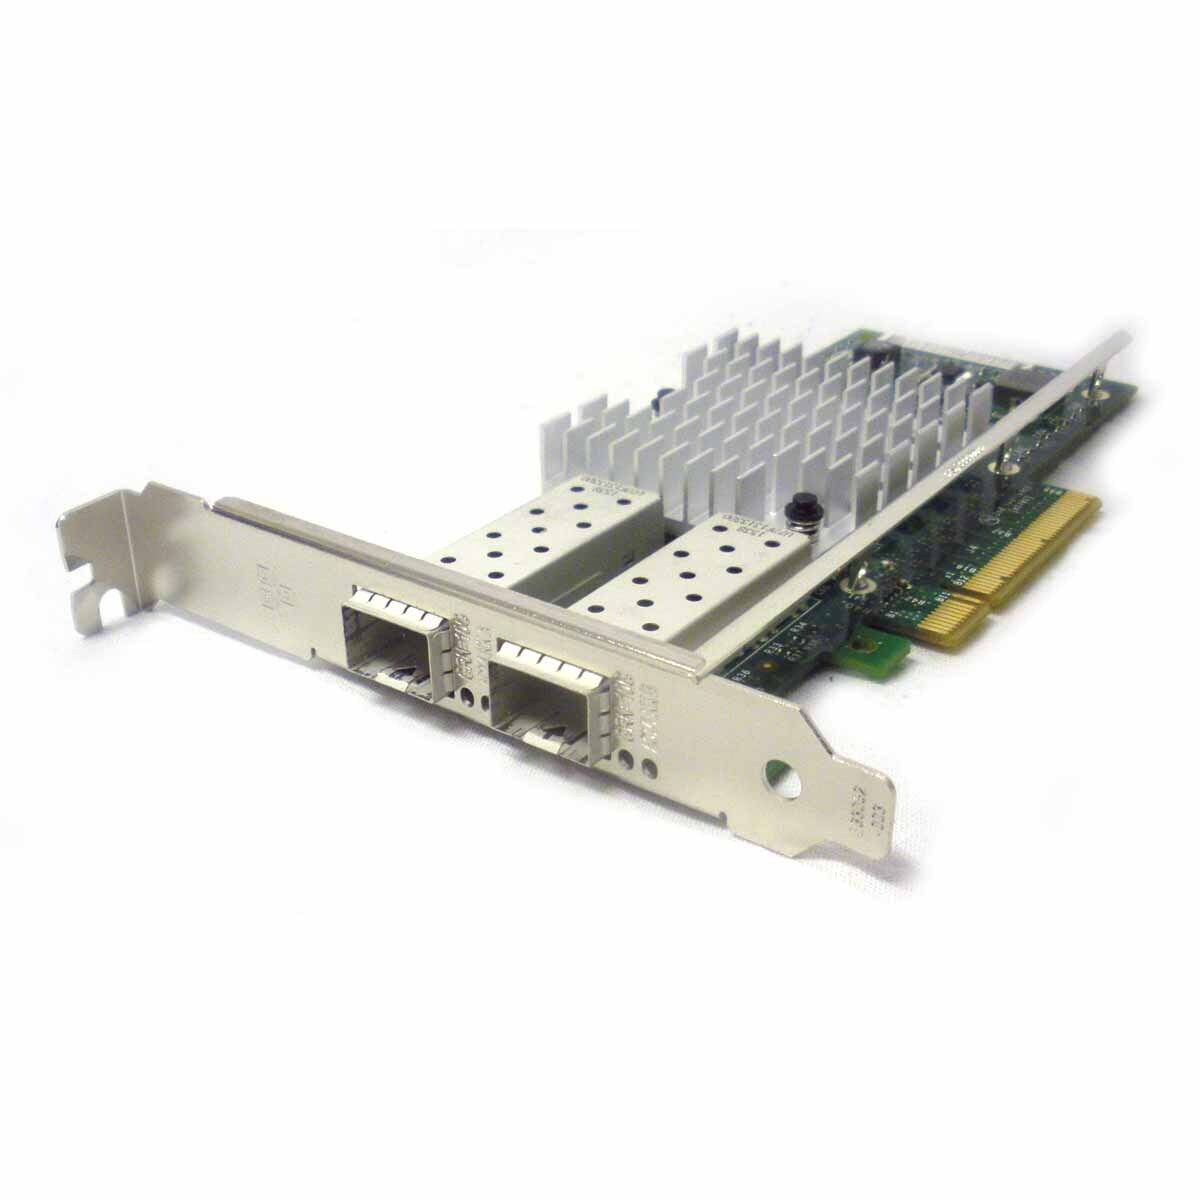 Cisco 74-6814-01 Intel X520-DA2 10GB 2-Port Server Adapter